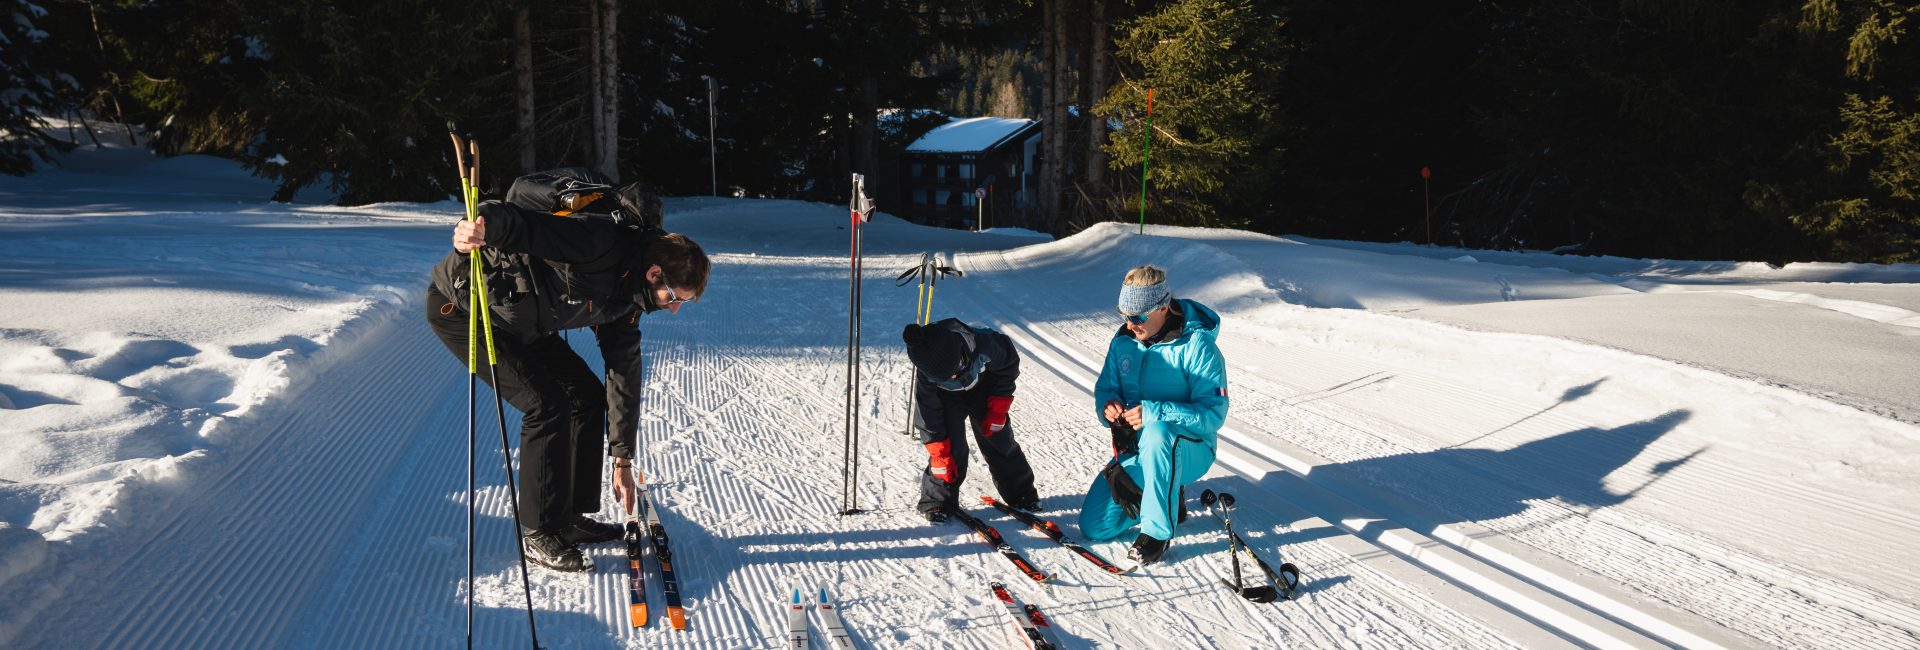 Ski de fond - Praz de Lys Sommand - Les globe blogueurs